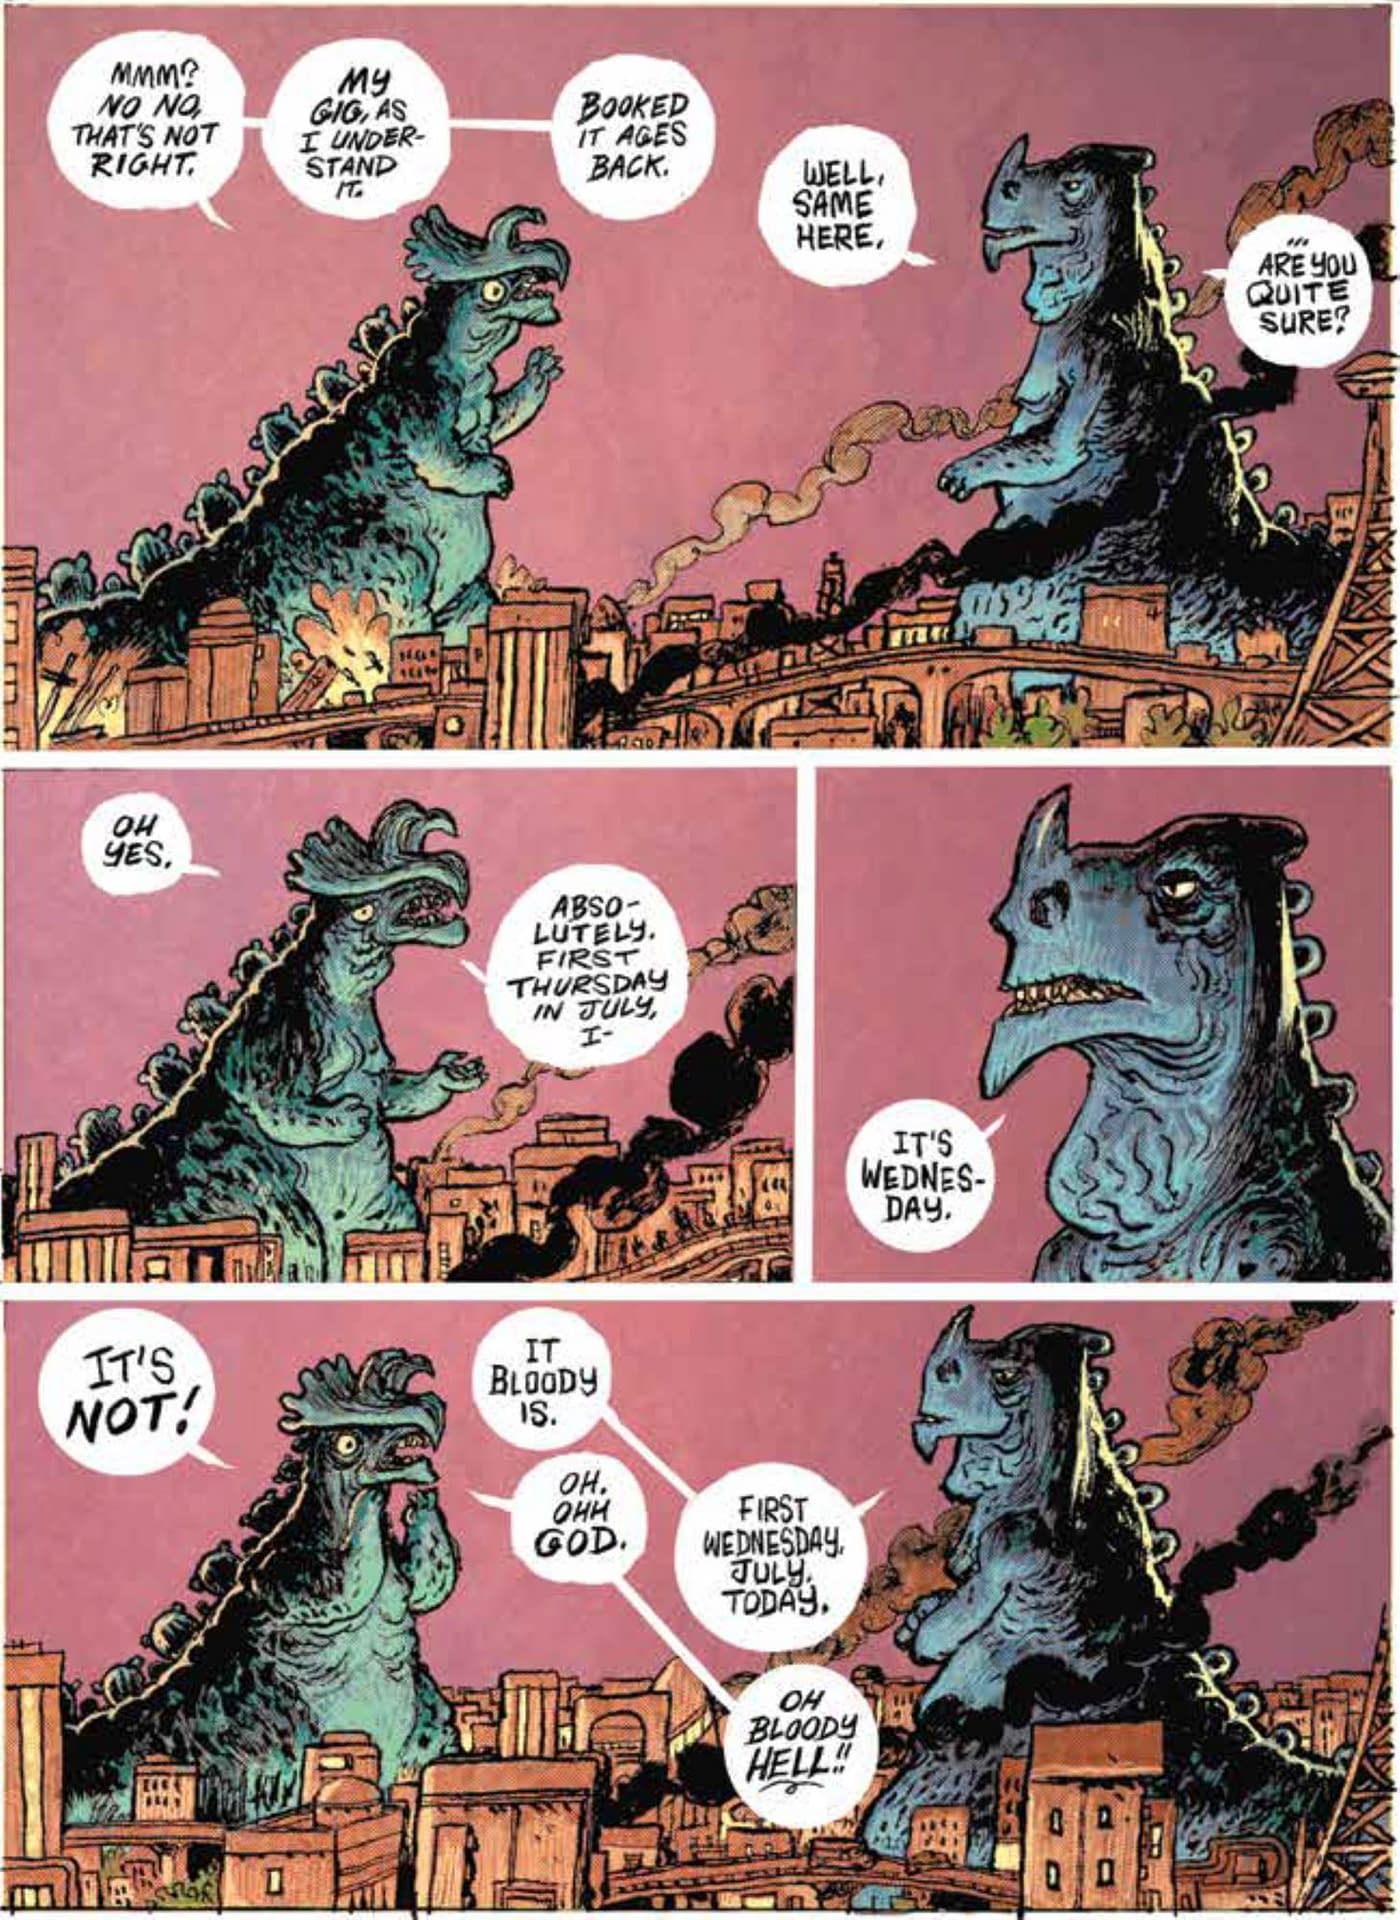 Mark Stafford's Most Social Embarrassing Gaffe For a Kaiju or Godzilla